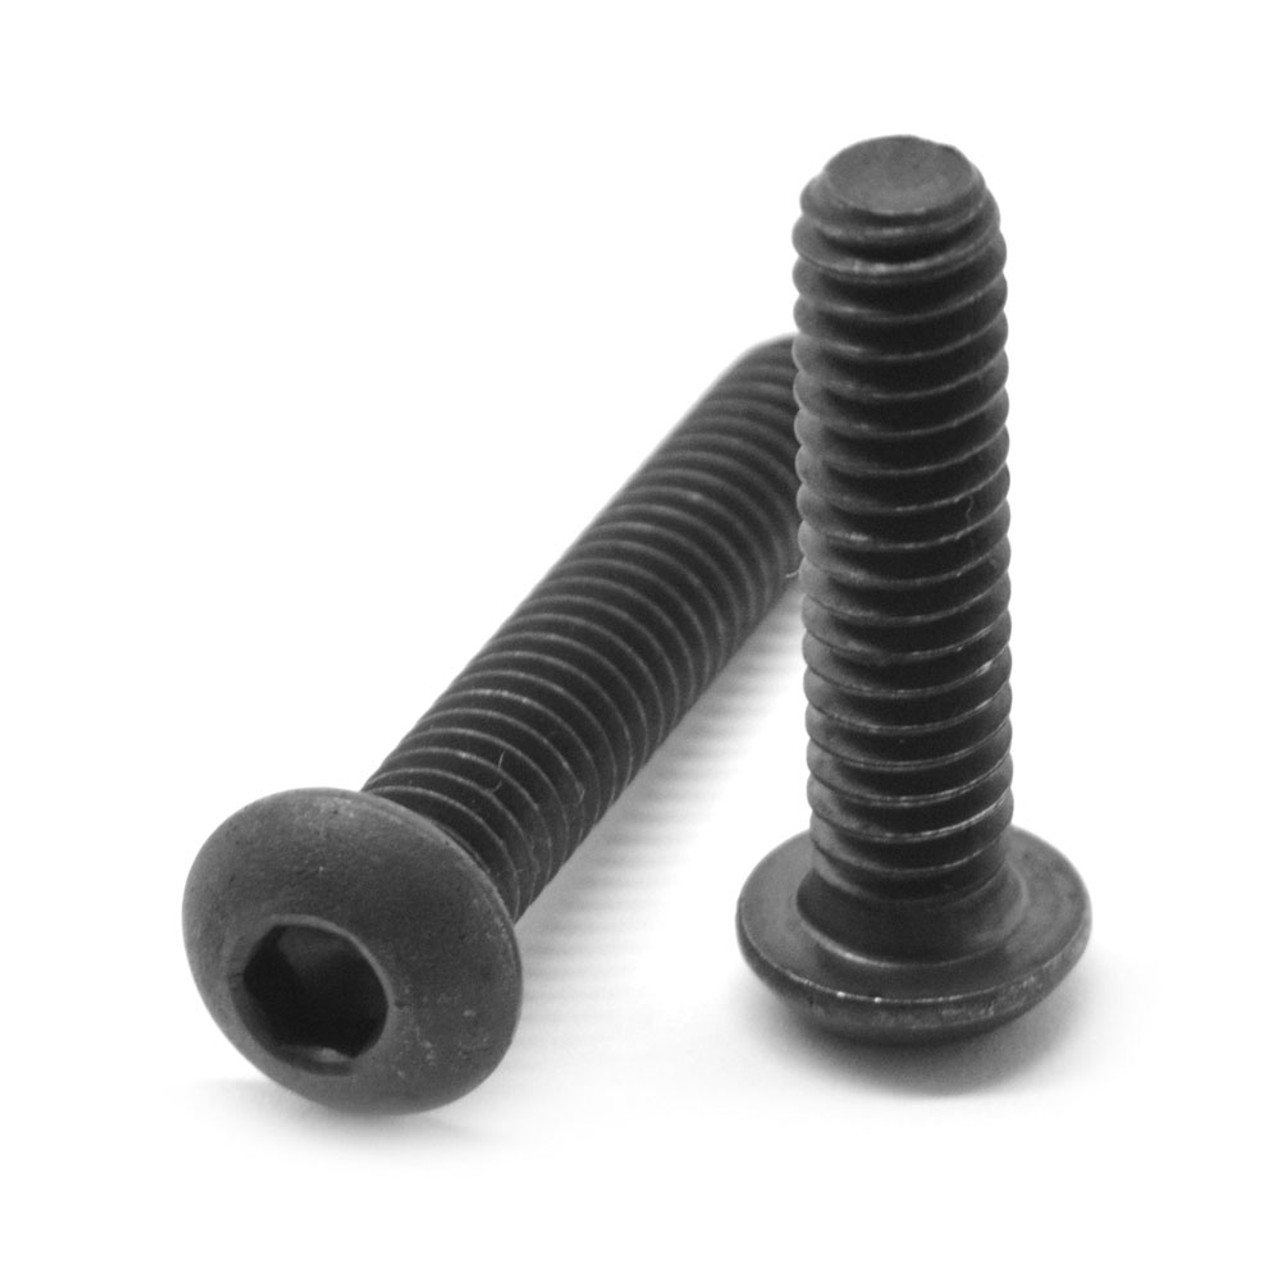 M12 x 1.75 x 25 MM (FT) Coarse Thread ISO 7380 Class 12.9 Socket Button Head Cap Screw Alloy Steel Black Oxide